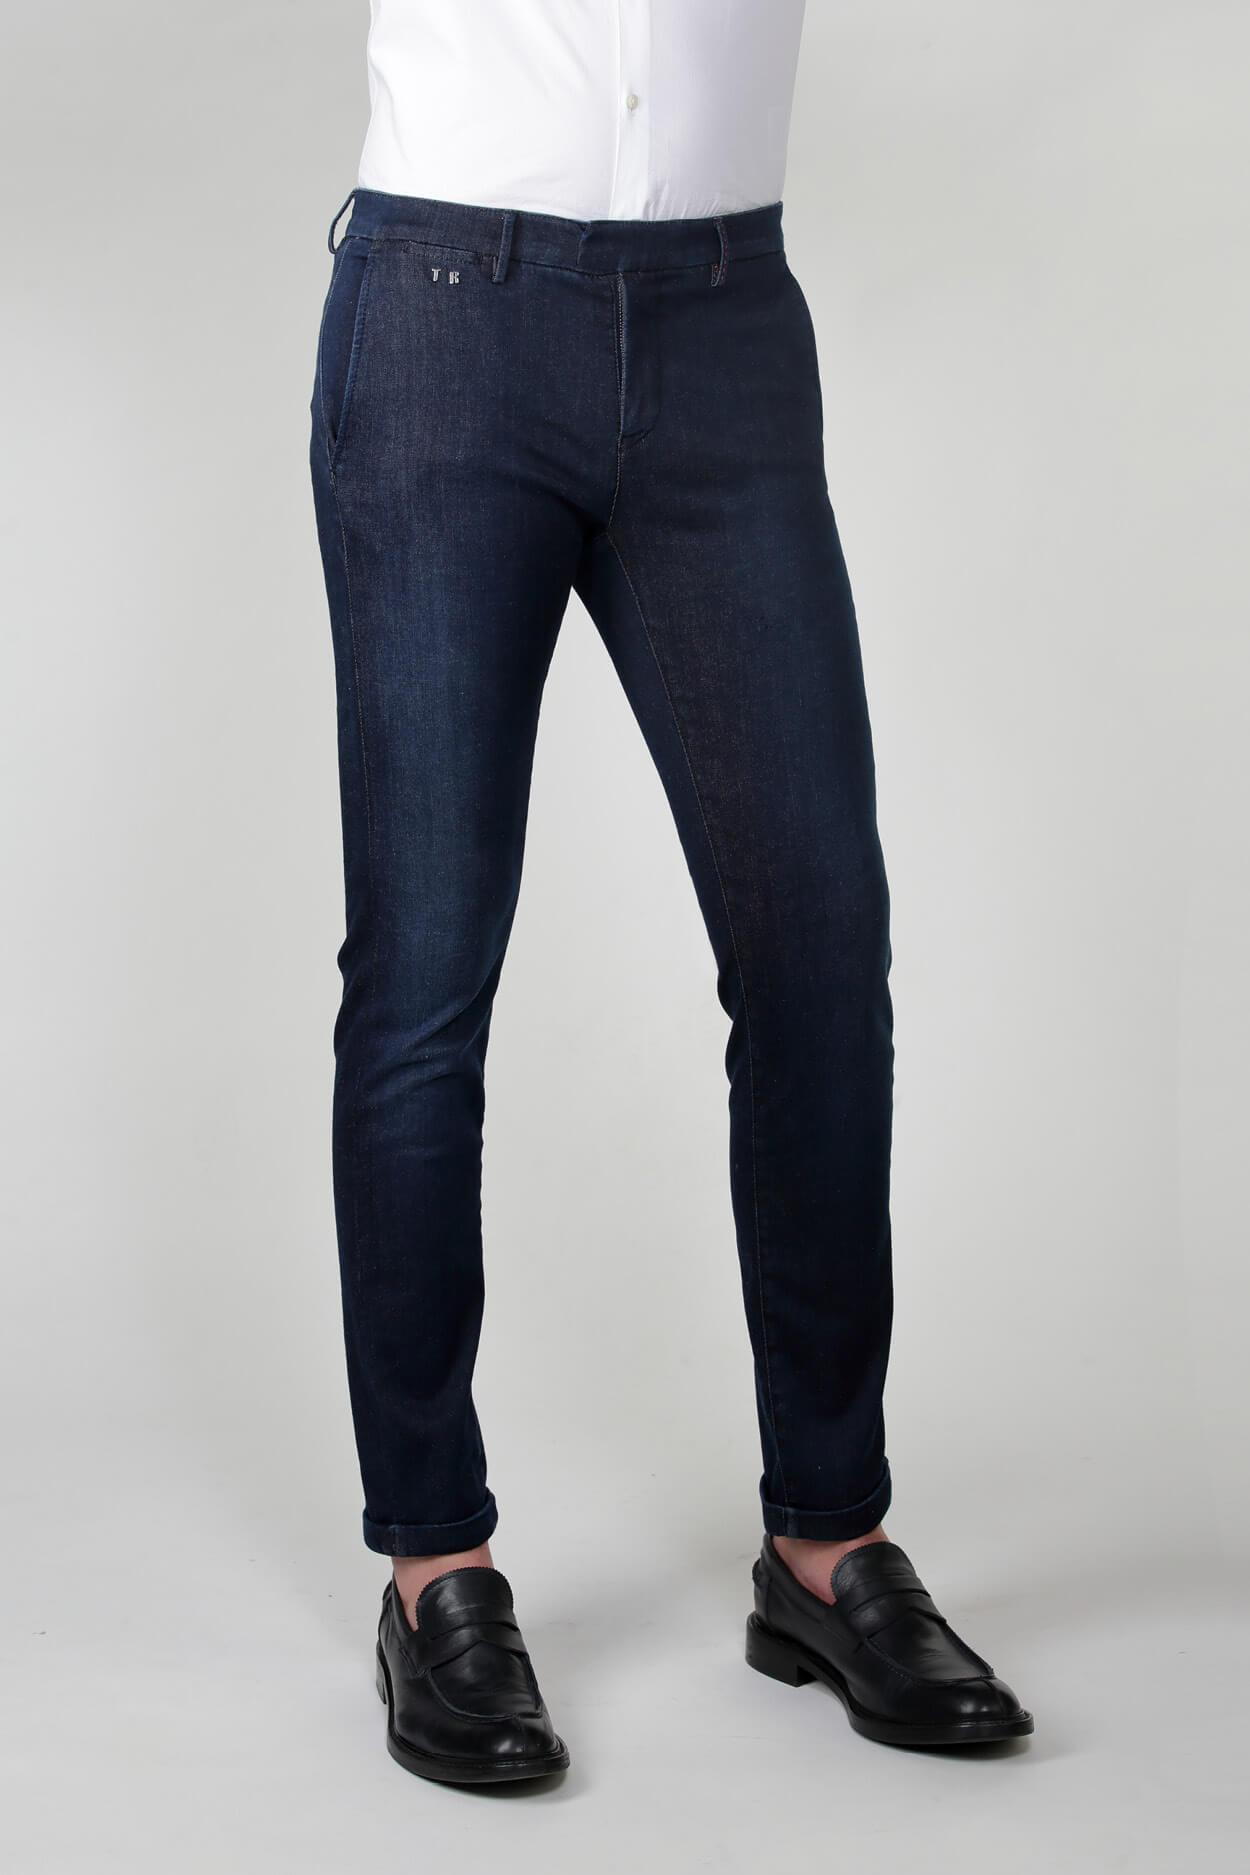 Tramarossa Jeans - SUPERSTRETCH DENIM - Model: LUIS SLIM